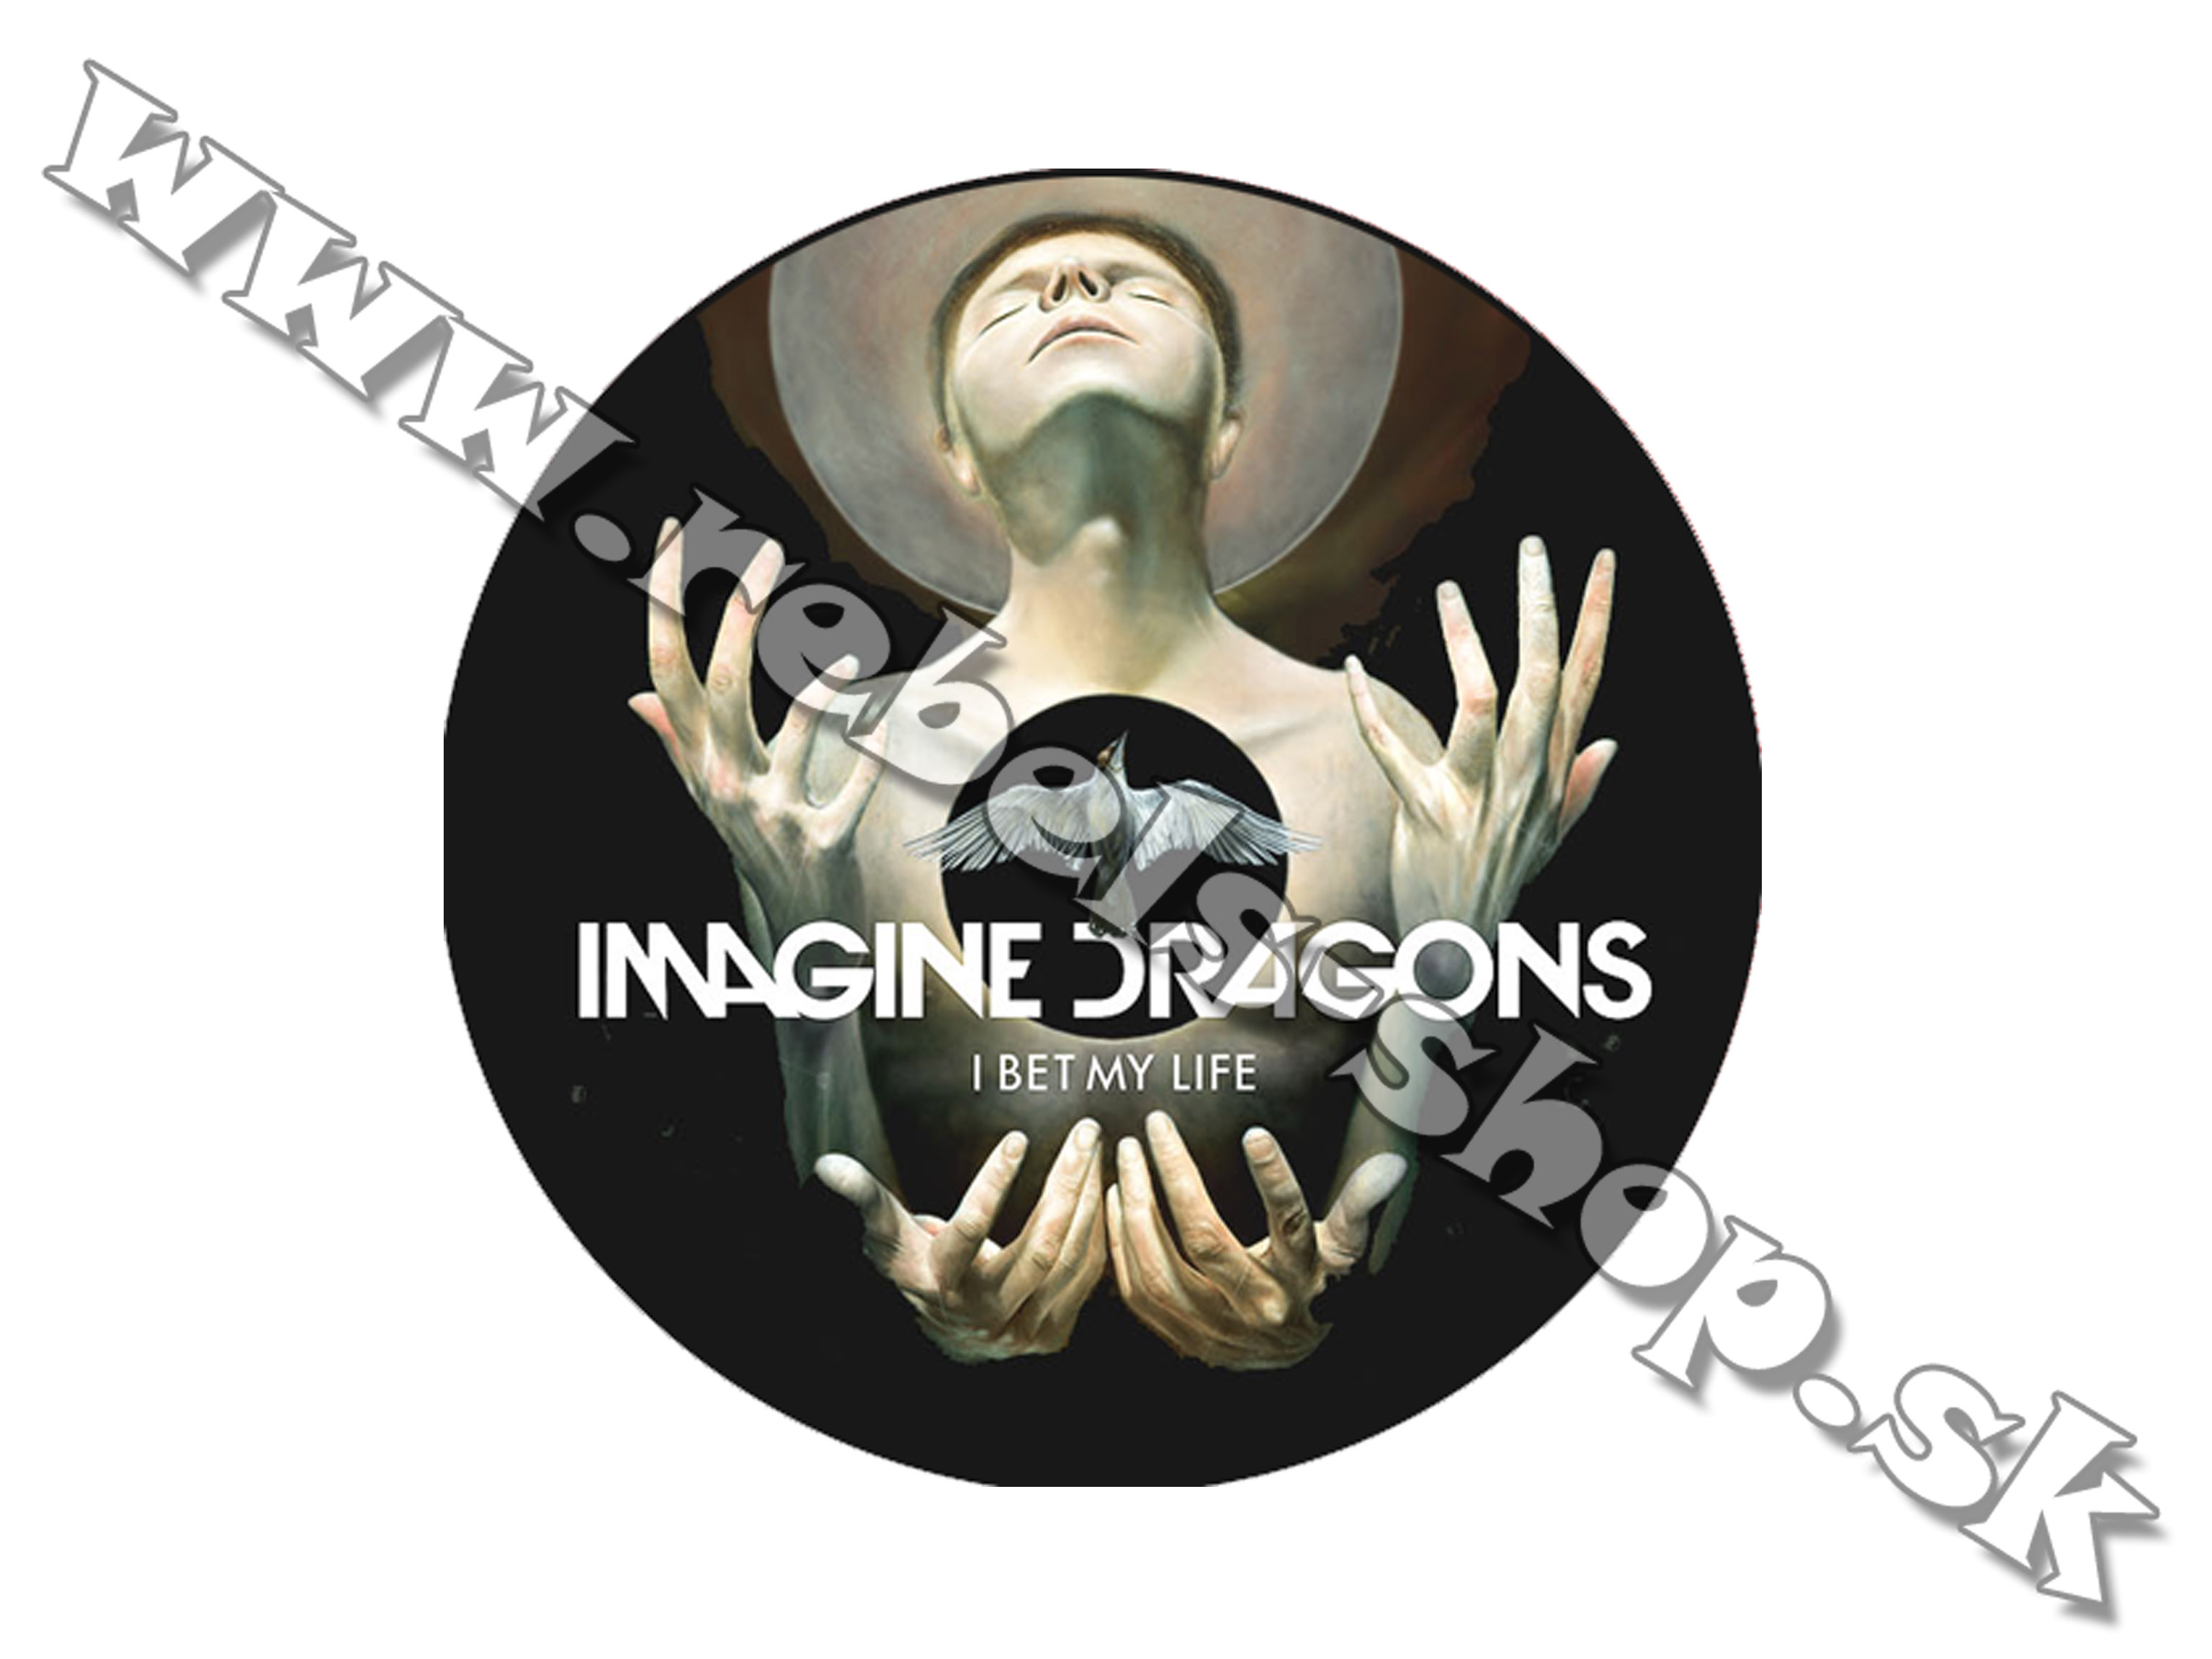 Odznak "Imagine Dragons"